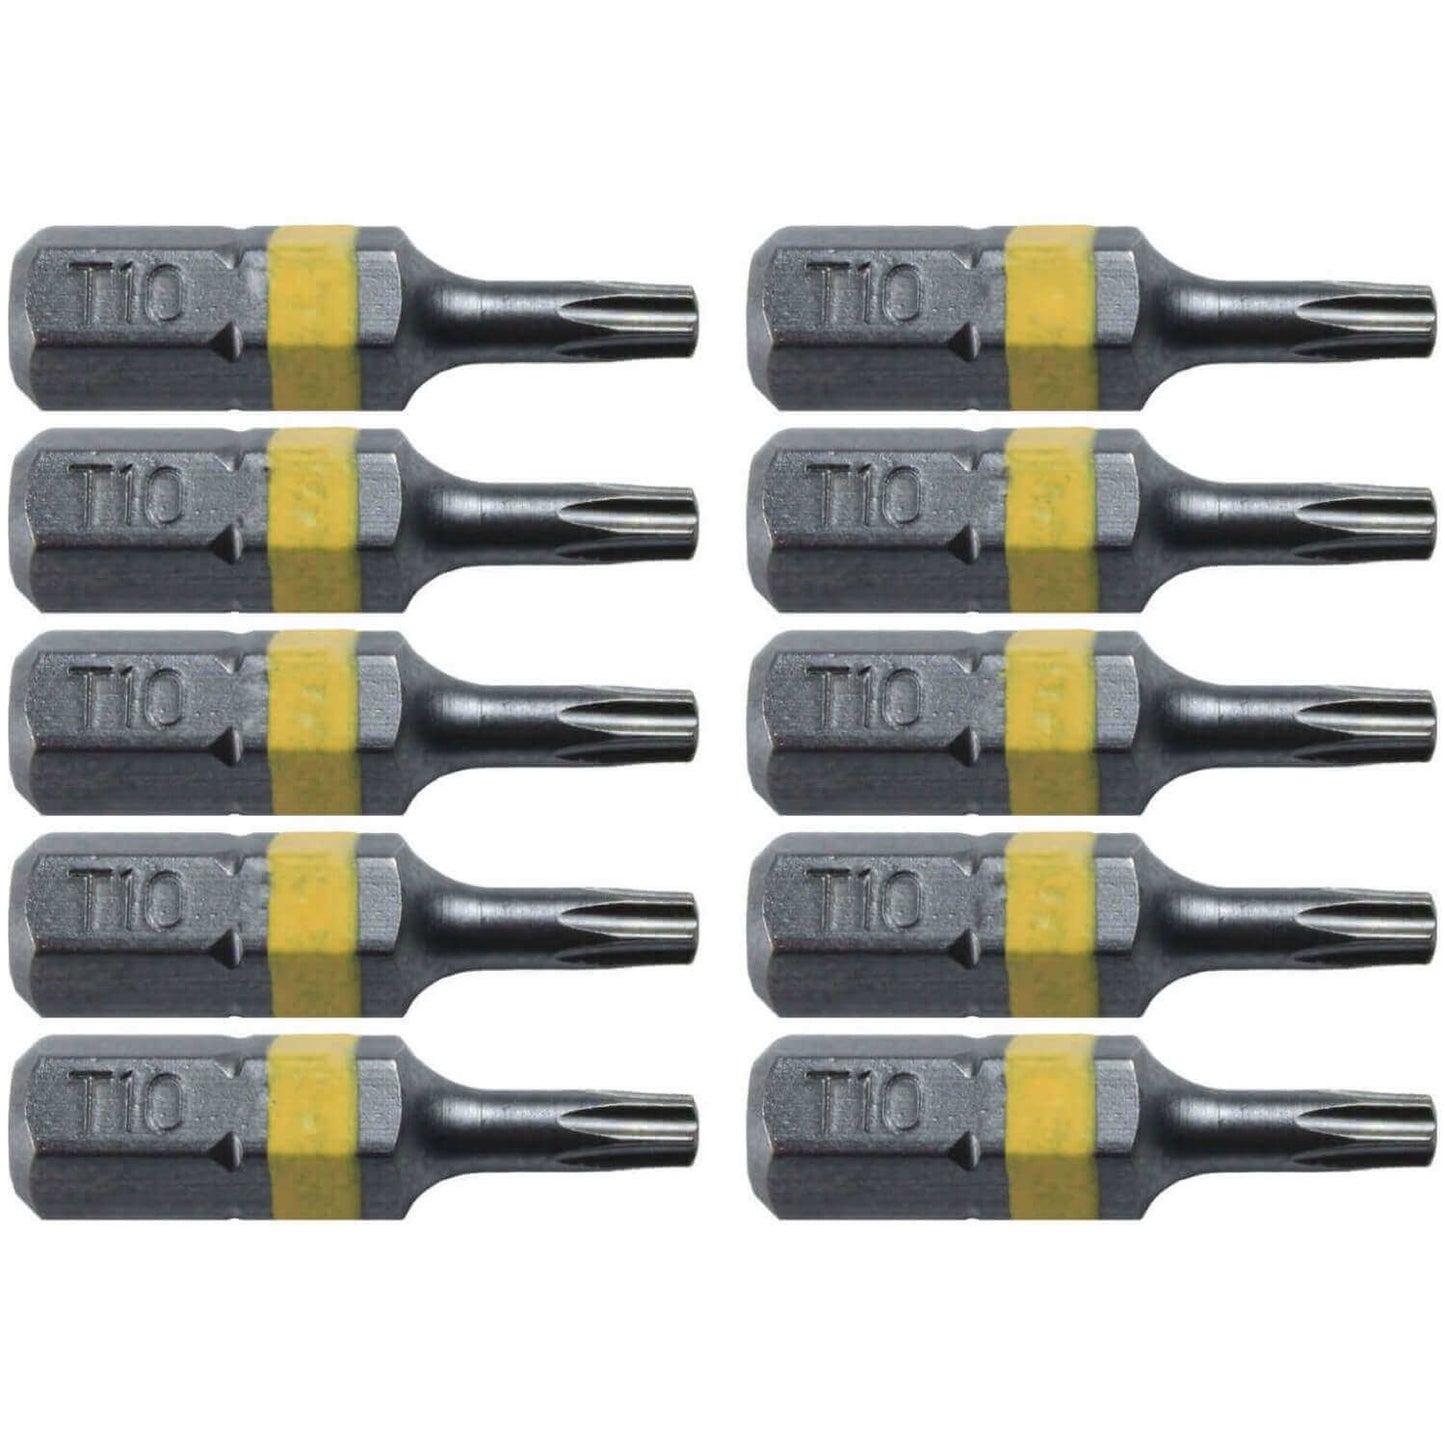 T10 (T-10) Torx/Star Driver Bit - Color Coded T10 x 1" Torx/Star Drive Bit for Screws and Fasteners